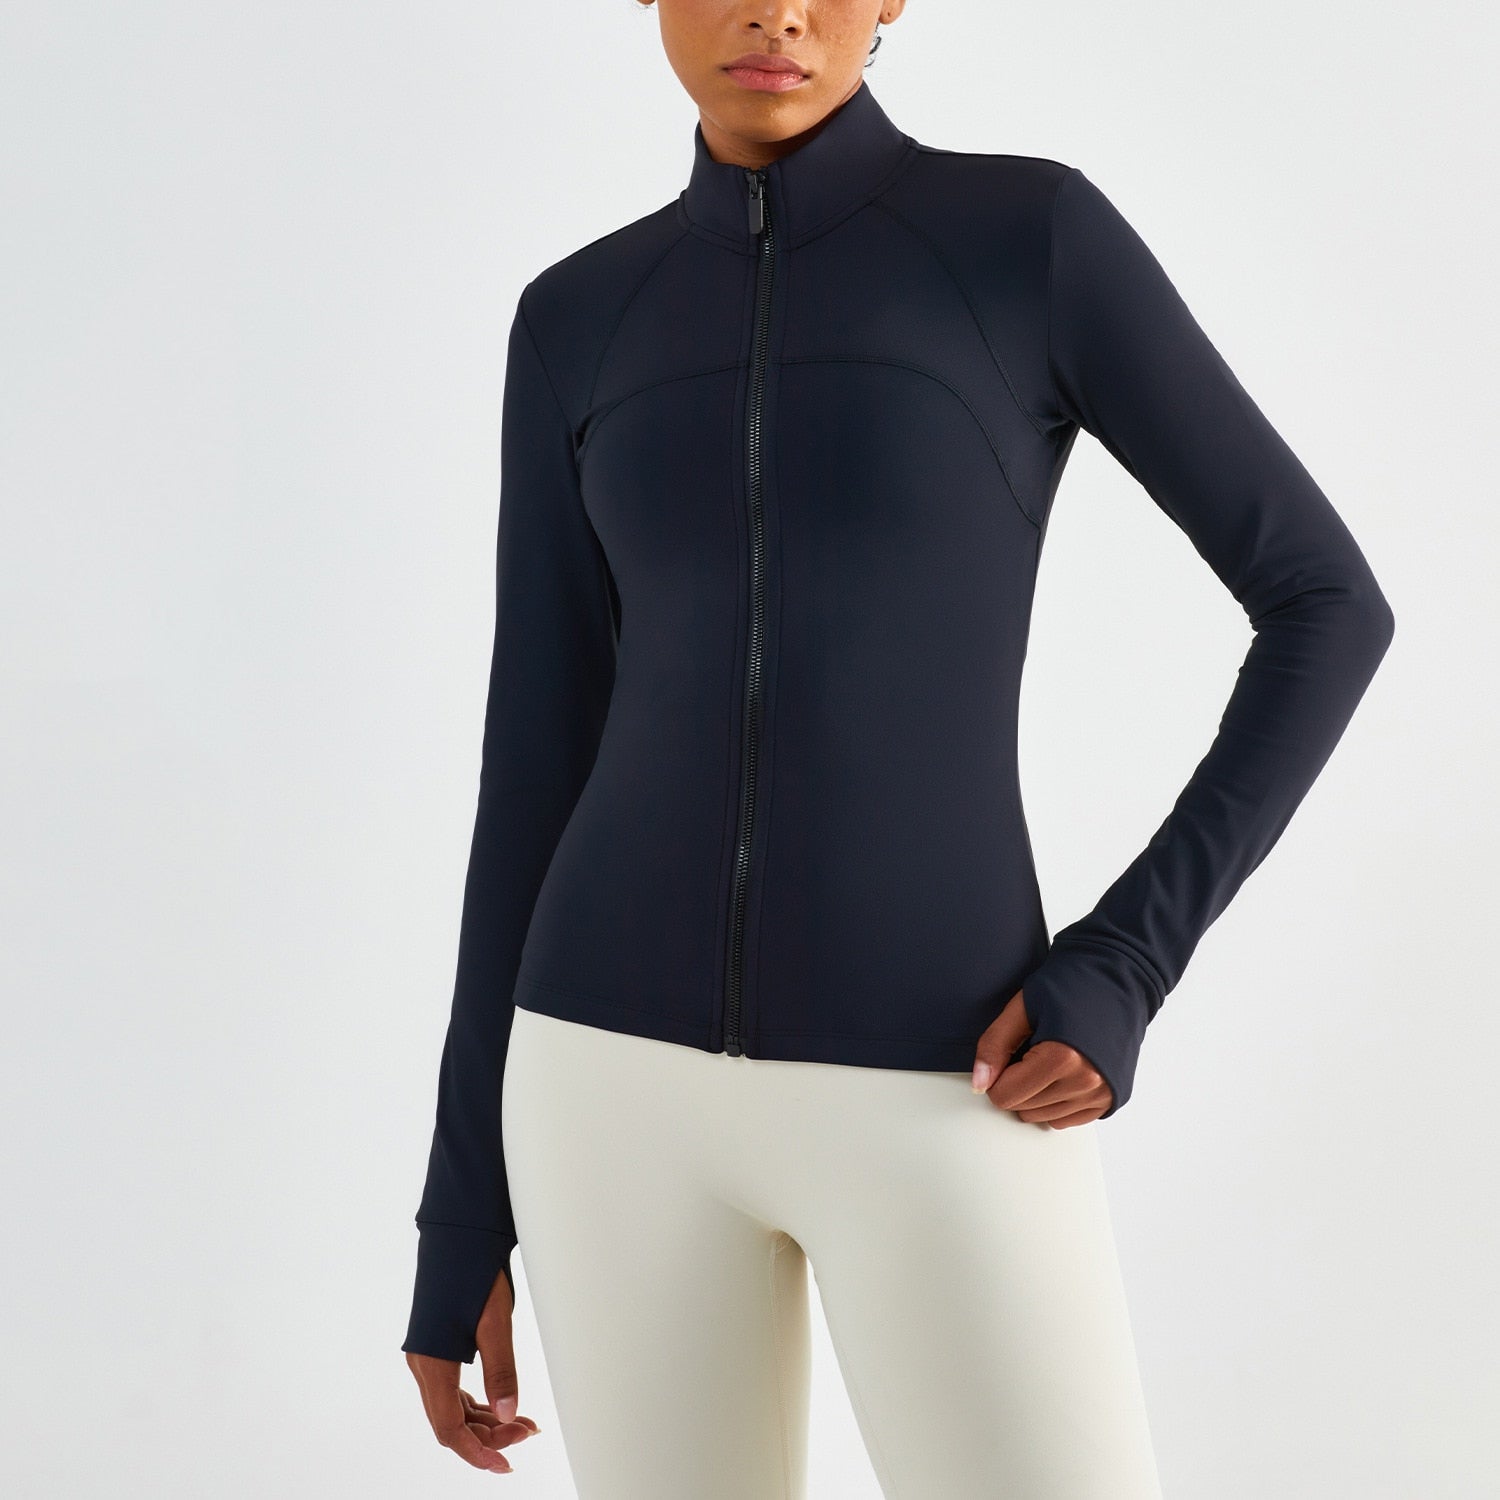 Long Sleeve Sports Jacket Women Zip Fitness Yoga Shirts Winter Warm Gym Top Activewear Running Coats Workout Clothes